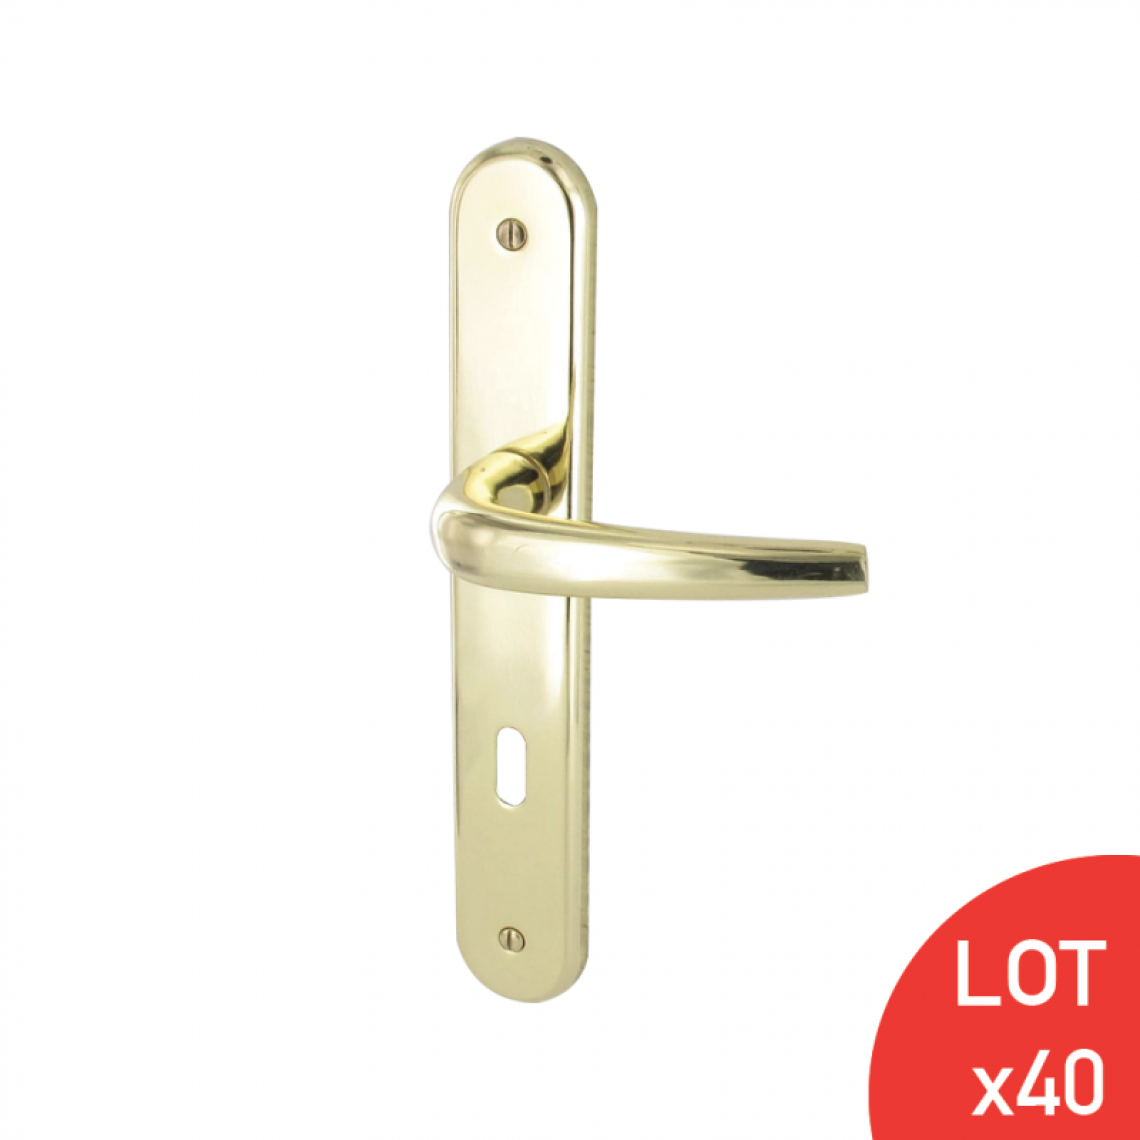 Sama - Poignées de porte laiton poli lingot trou de clé L LOT DE 40 - Poignée de porte